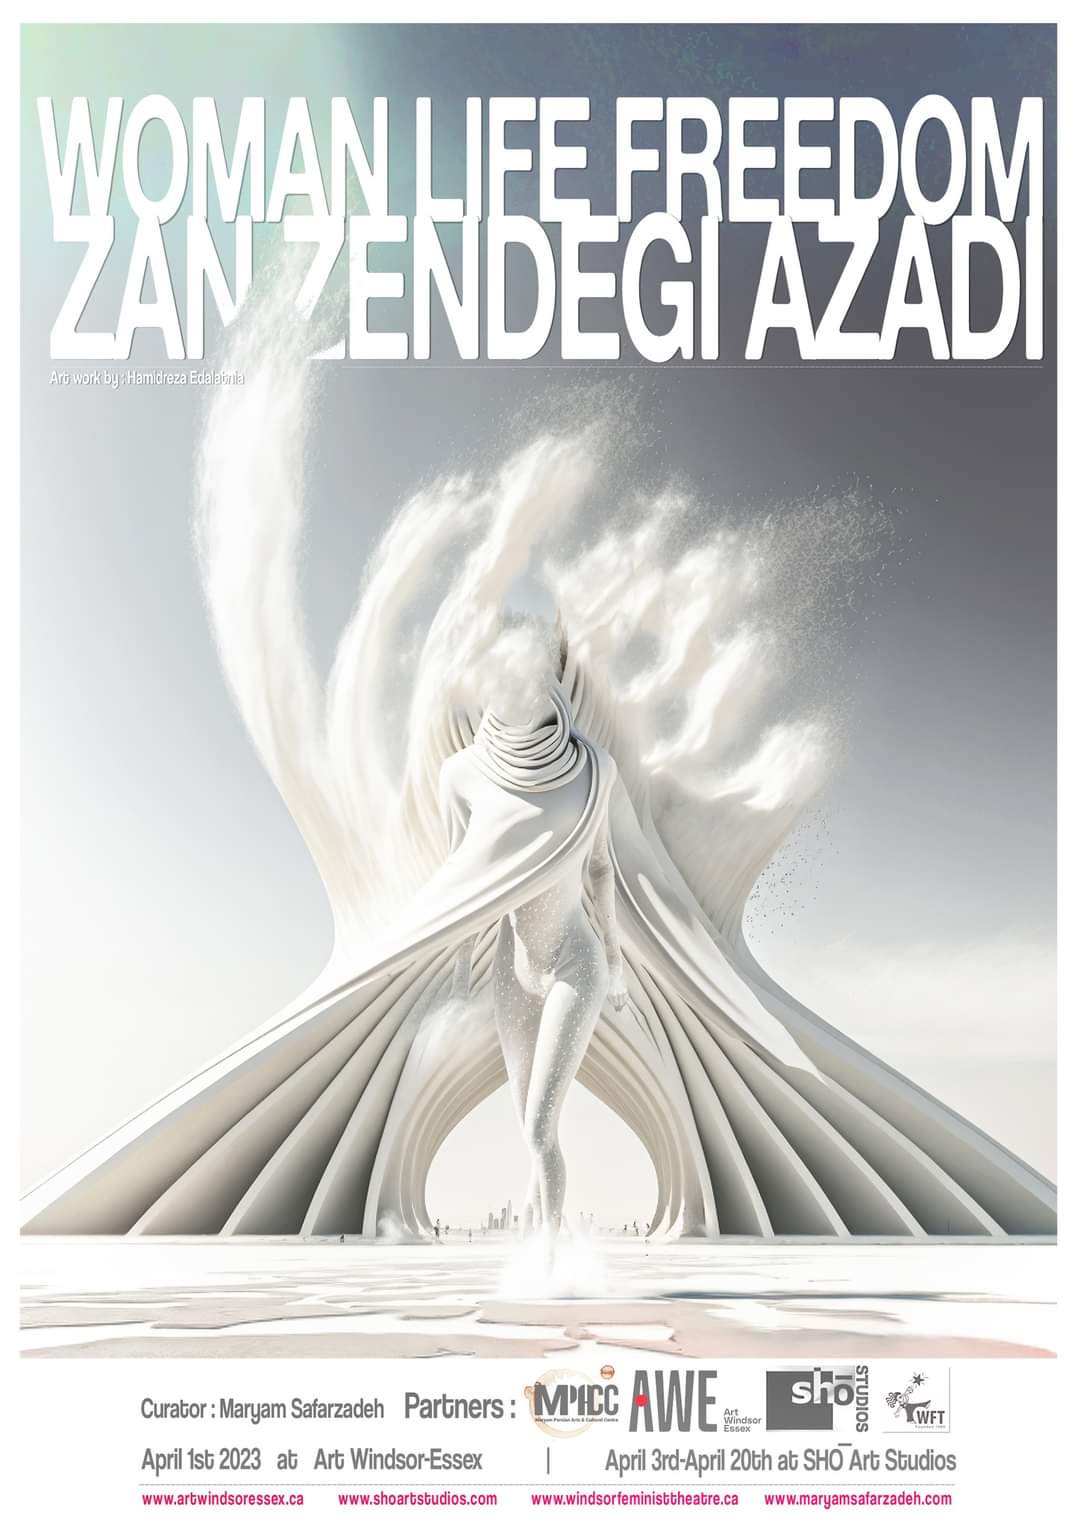 Woman Life Freedom / Zan Zendegi Azadi